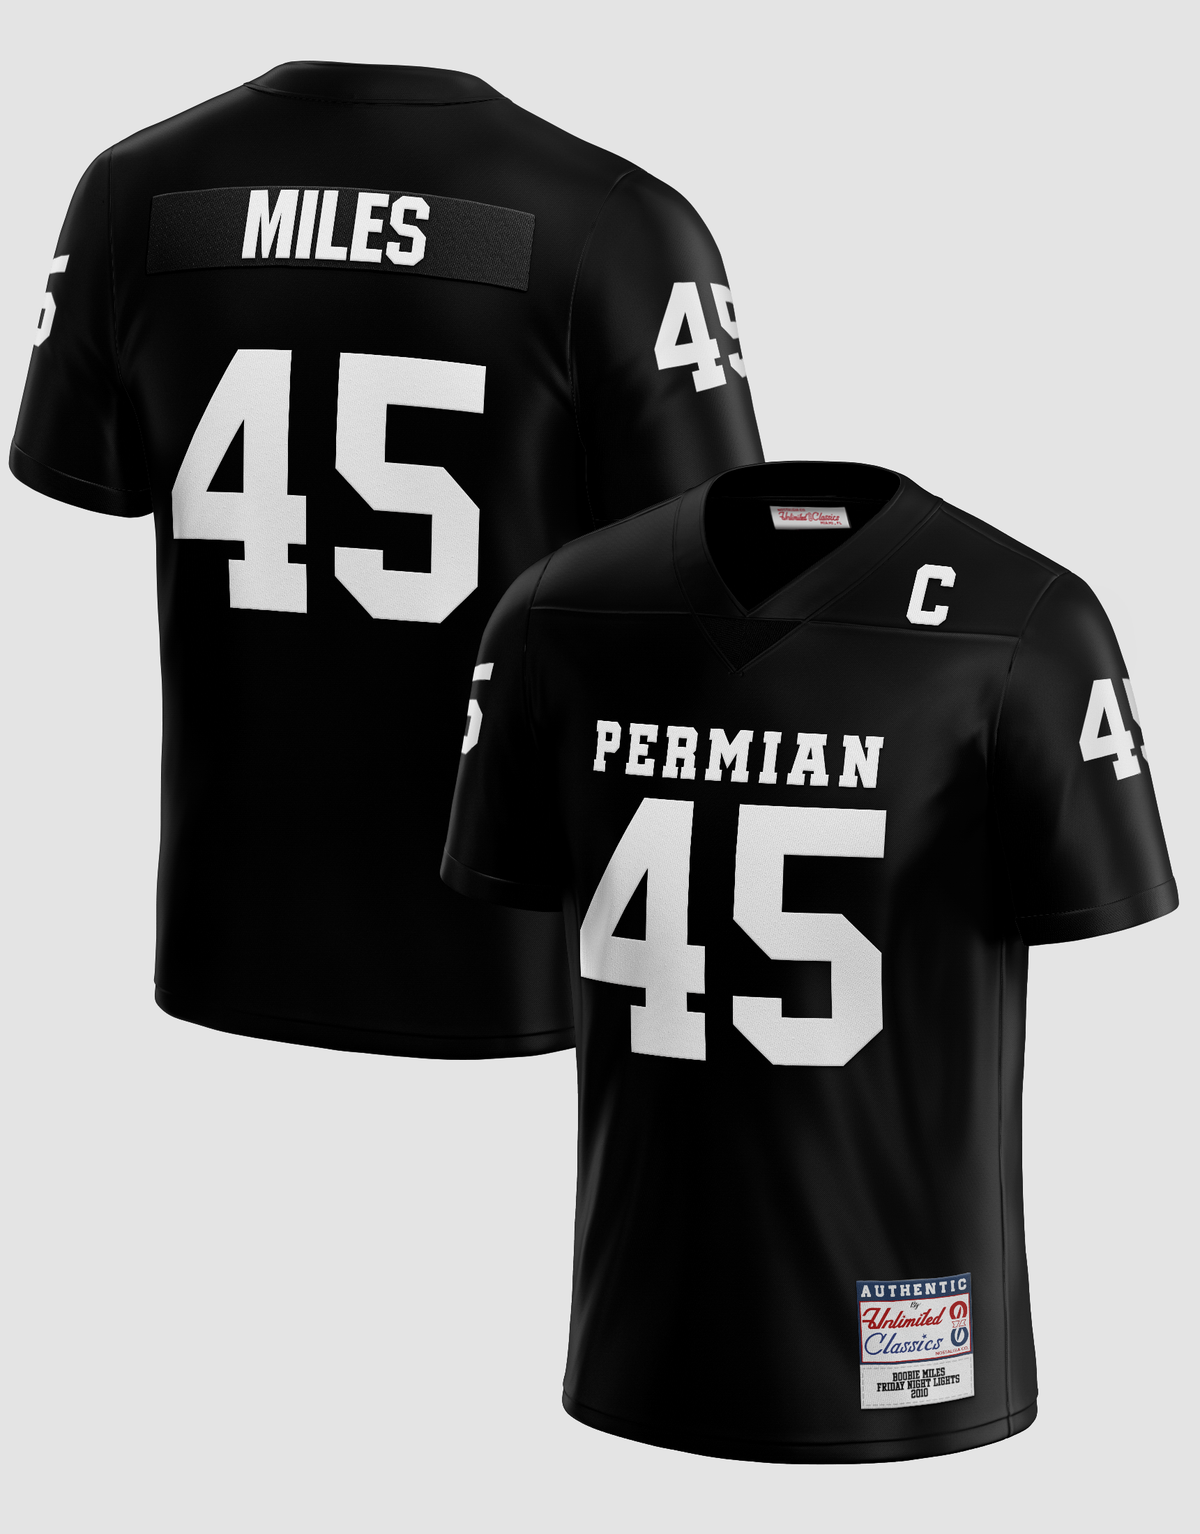 Boobie Miles #45 Permian Black Football Jersey